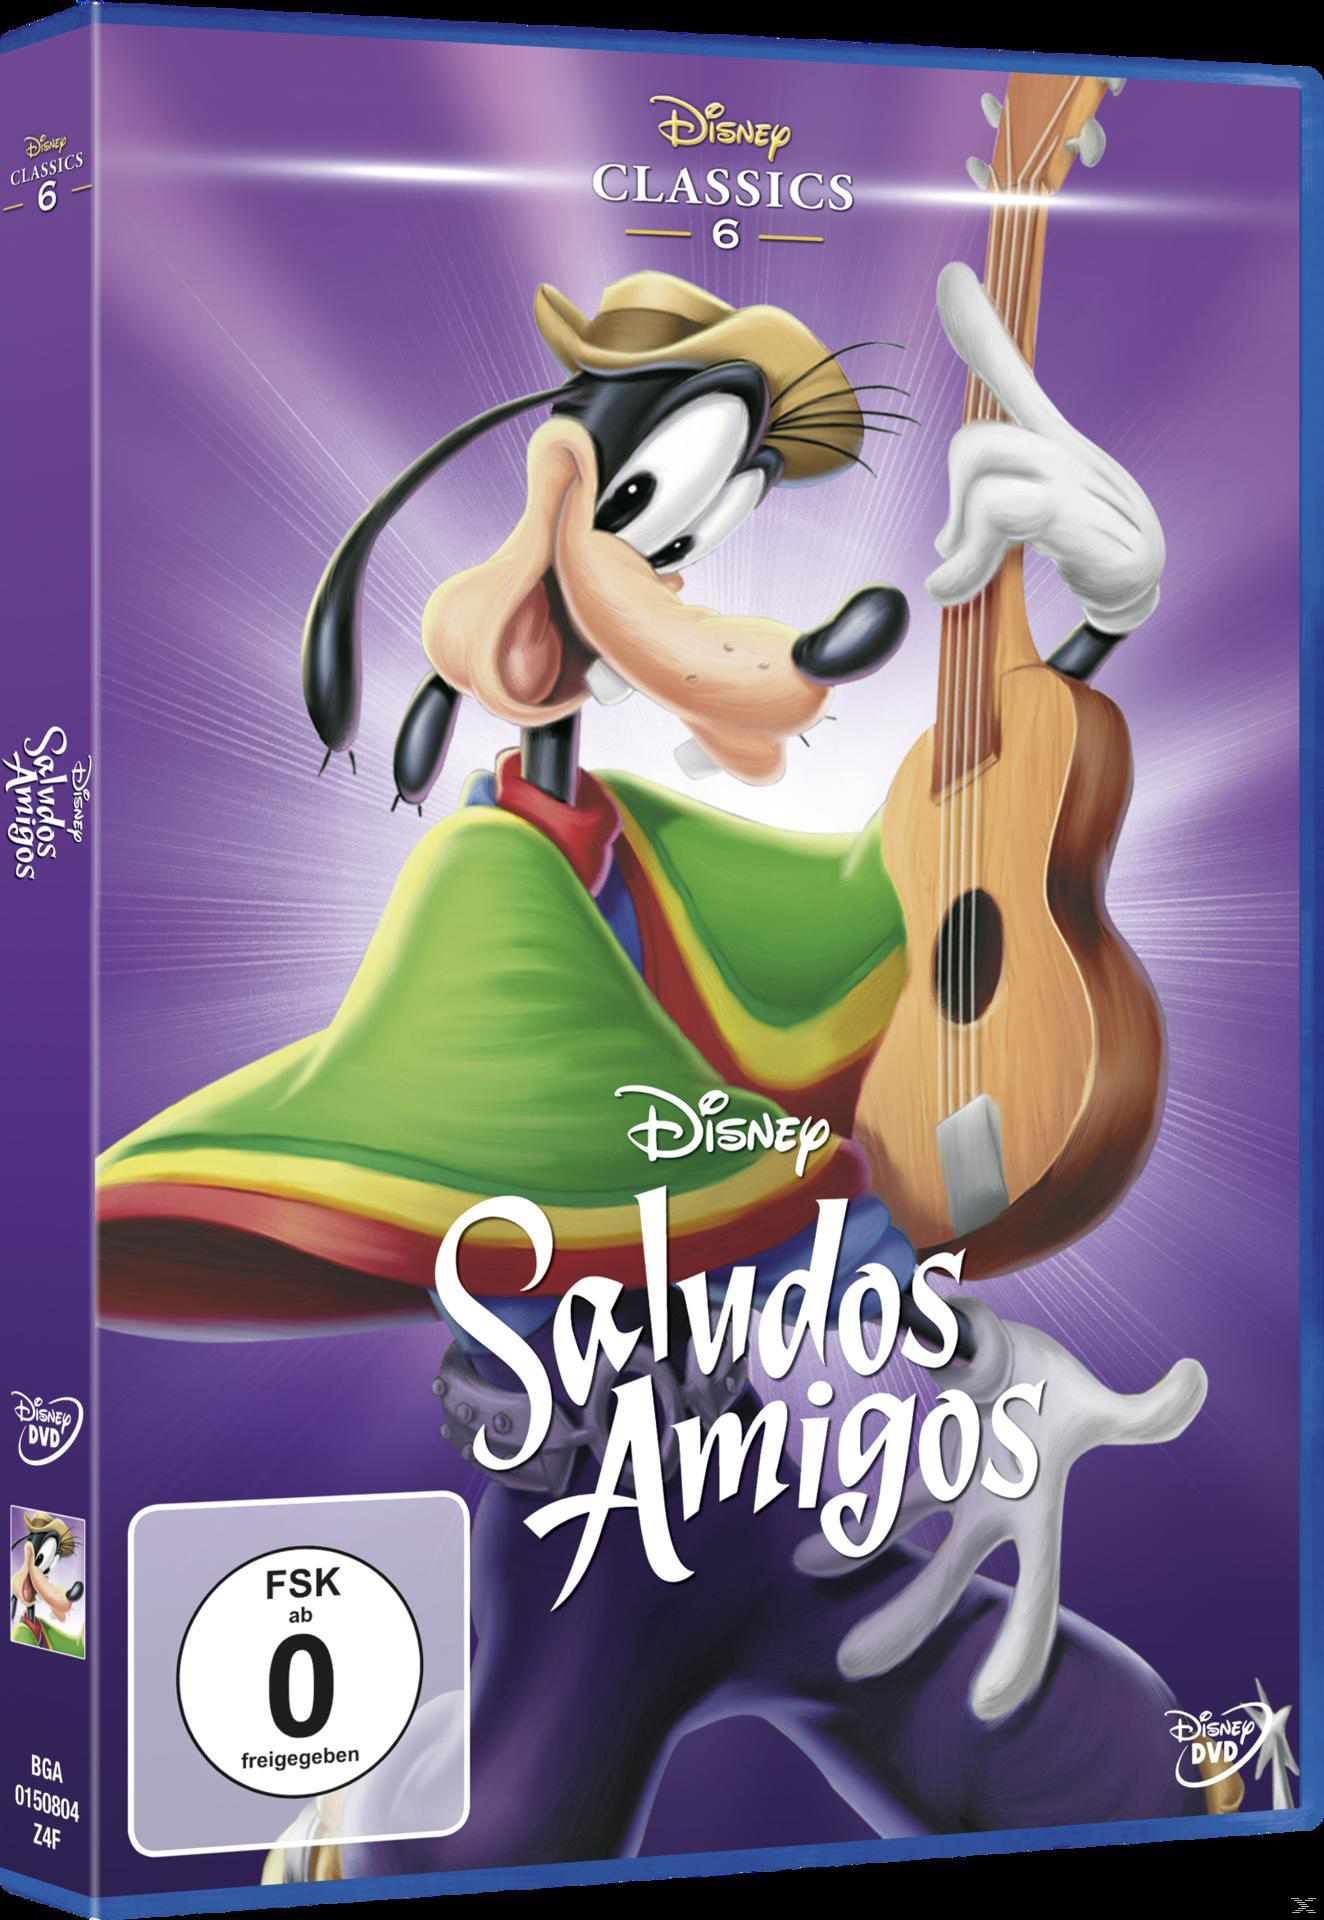 DVD Saludos Classics) (Disney Amigos